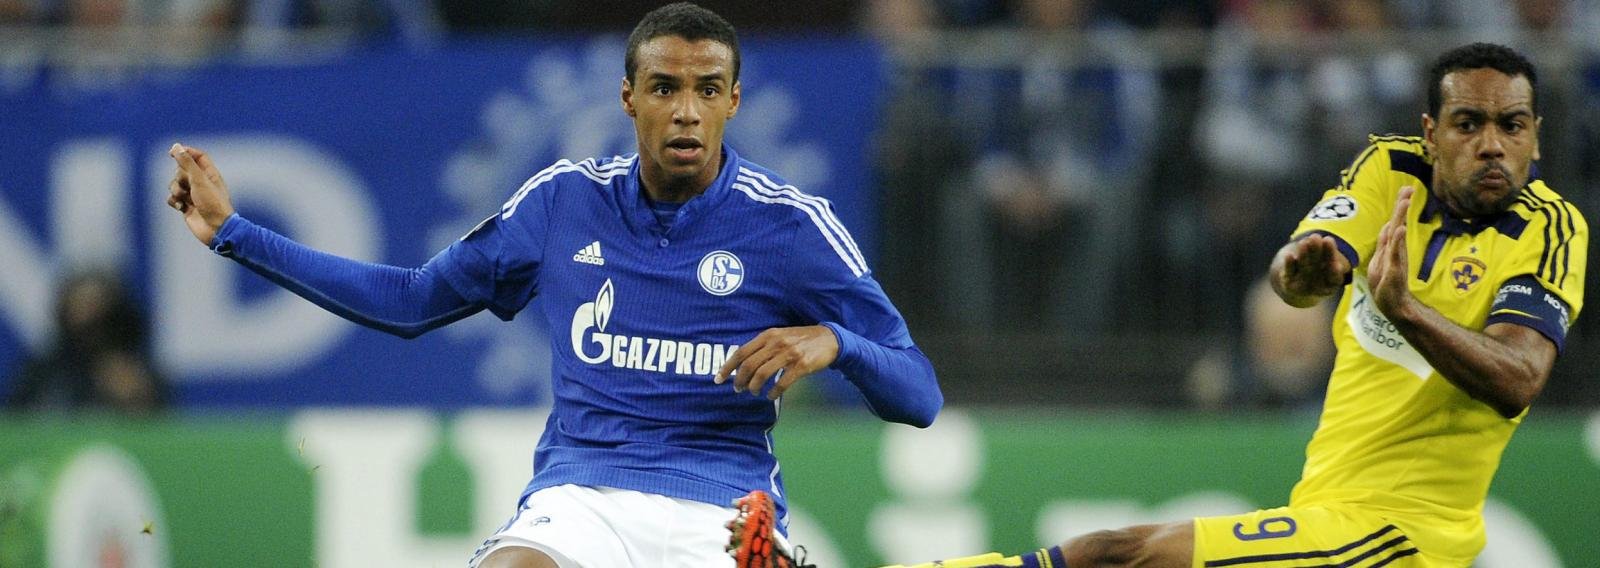 Liverpool’s top defensive target turns down new deal at Schalke